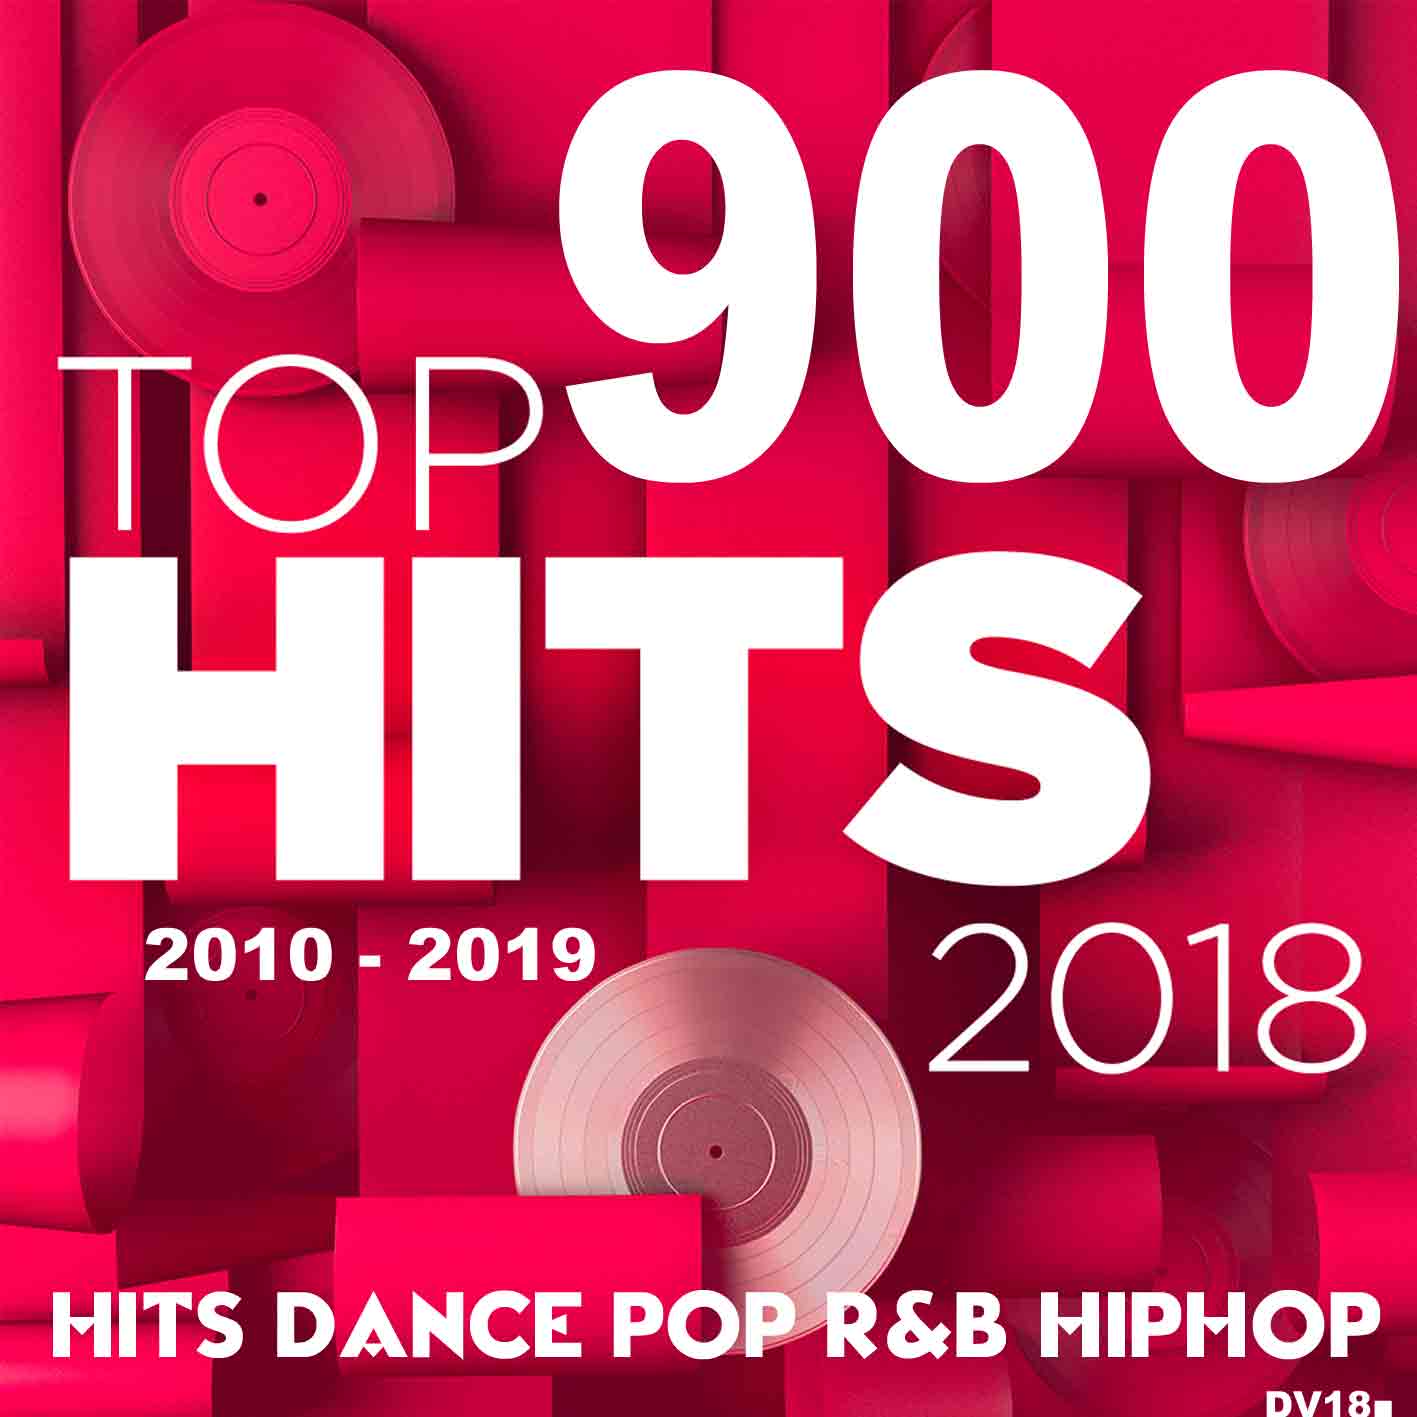 DV18 900 TOP HITS (Hits Dance Pop R&B Hip Hop 20102019) MP3DVD